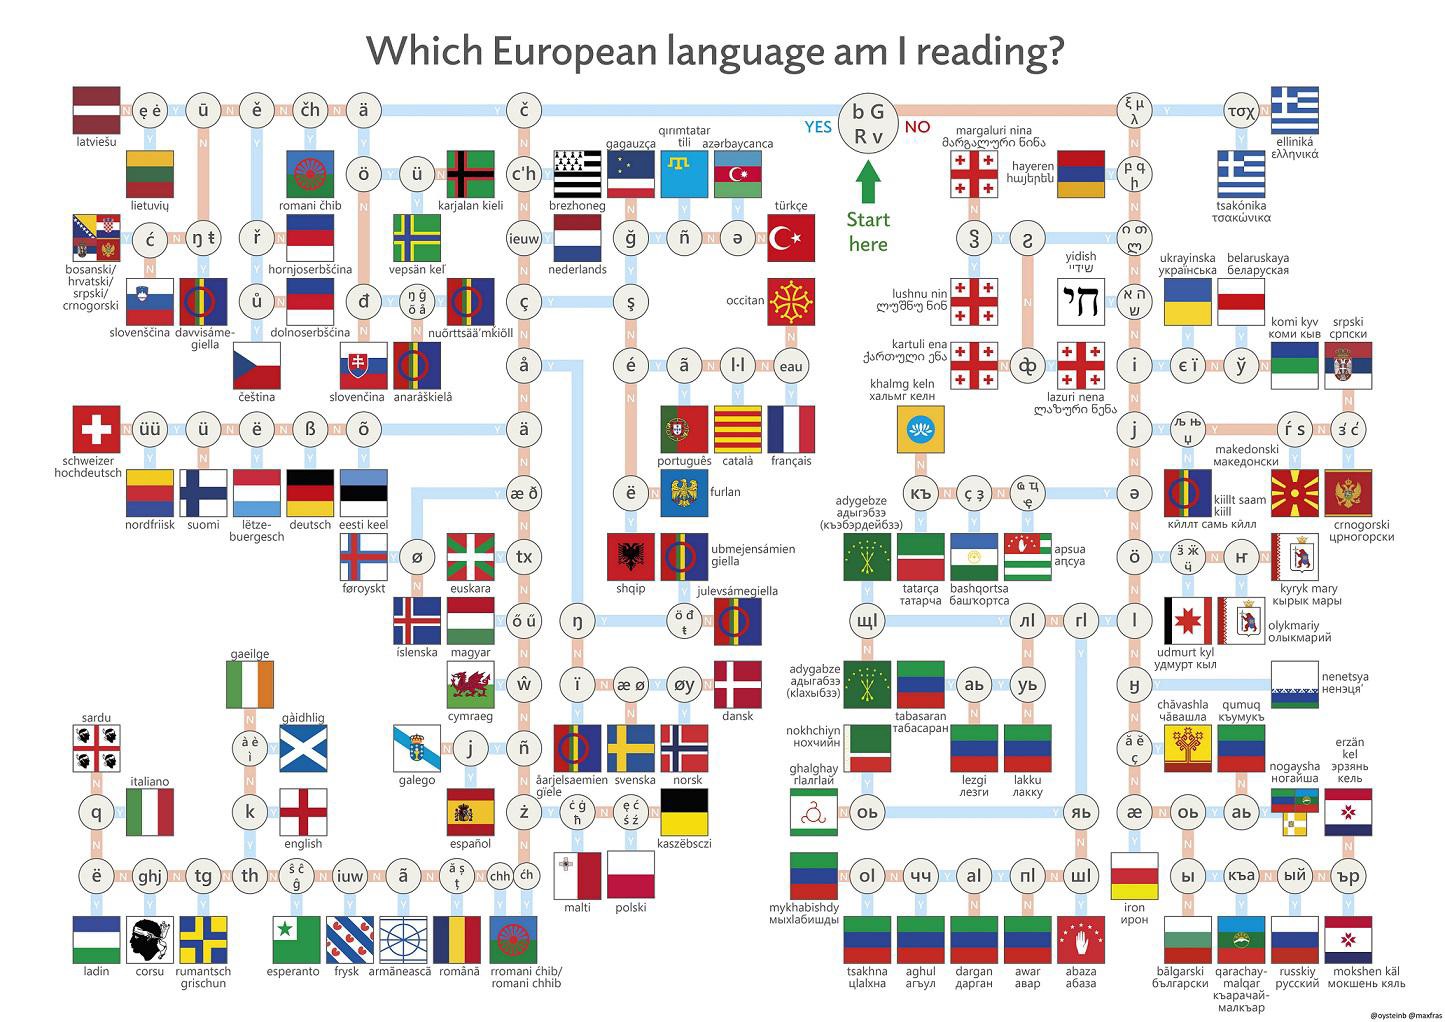 https://www.reddit.com/r/languagelearning/comments/lmwsw7/what_european_language_am_i_reading_european